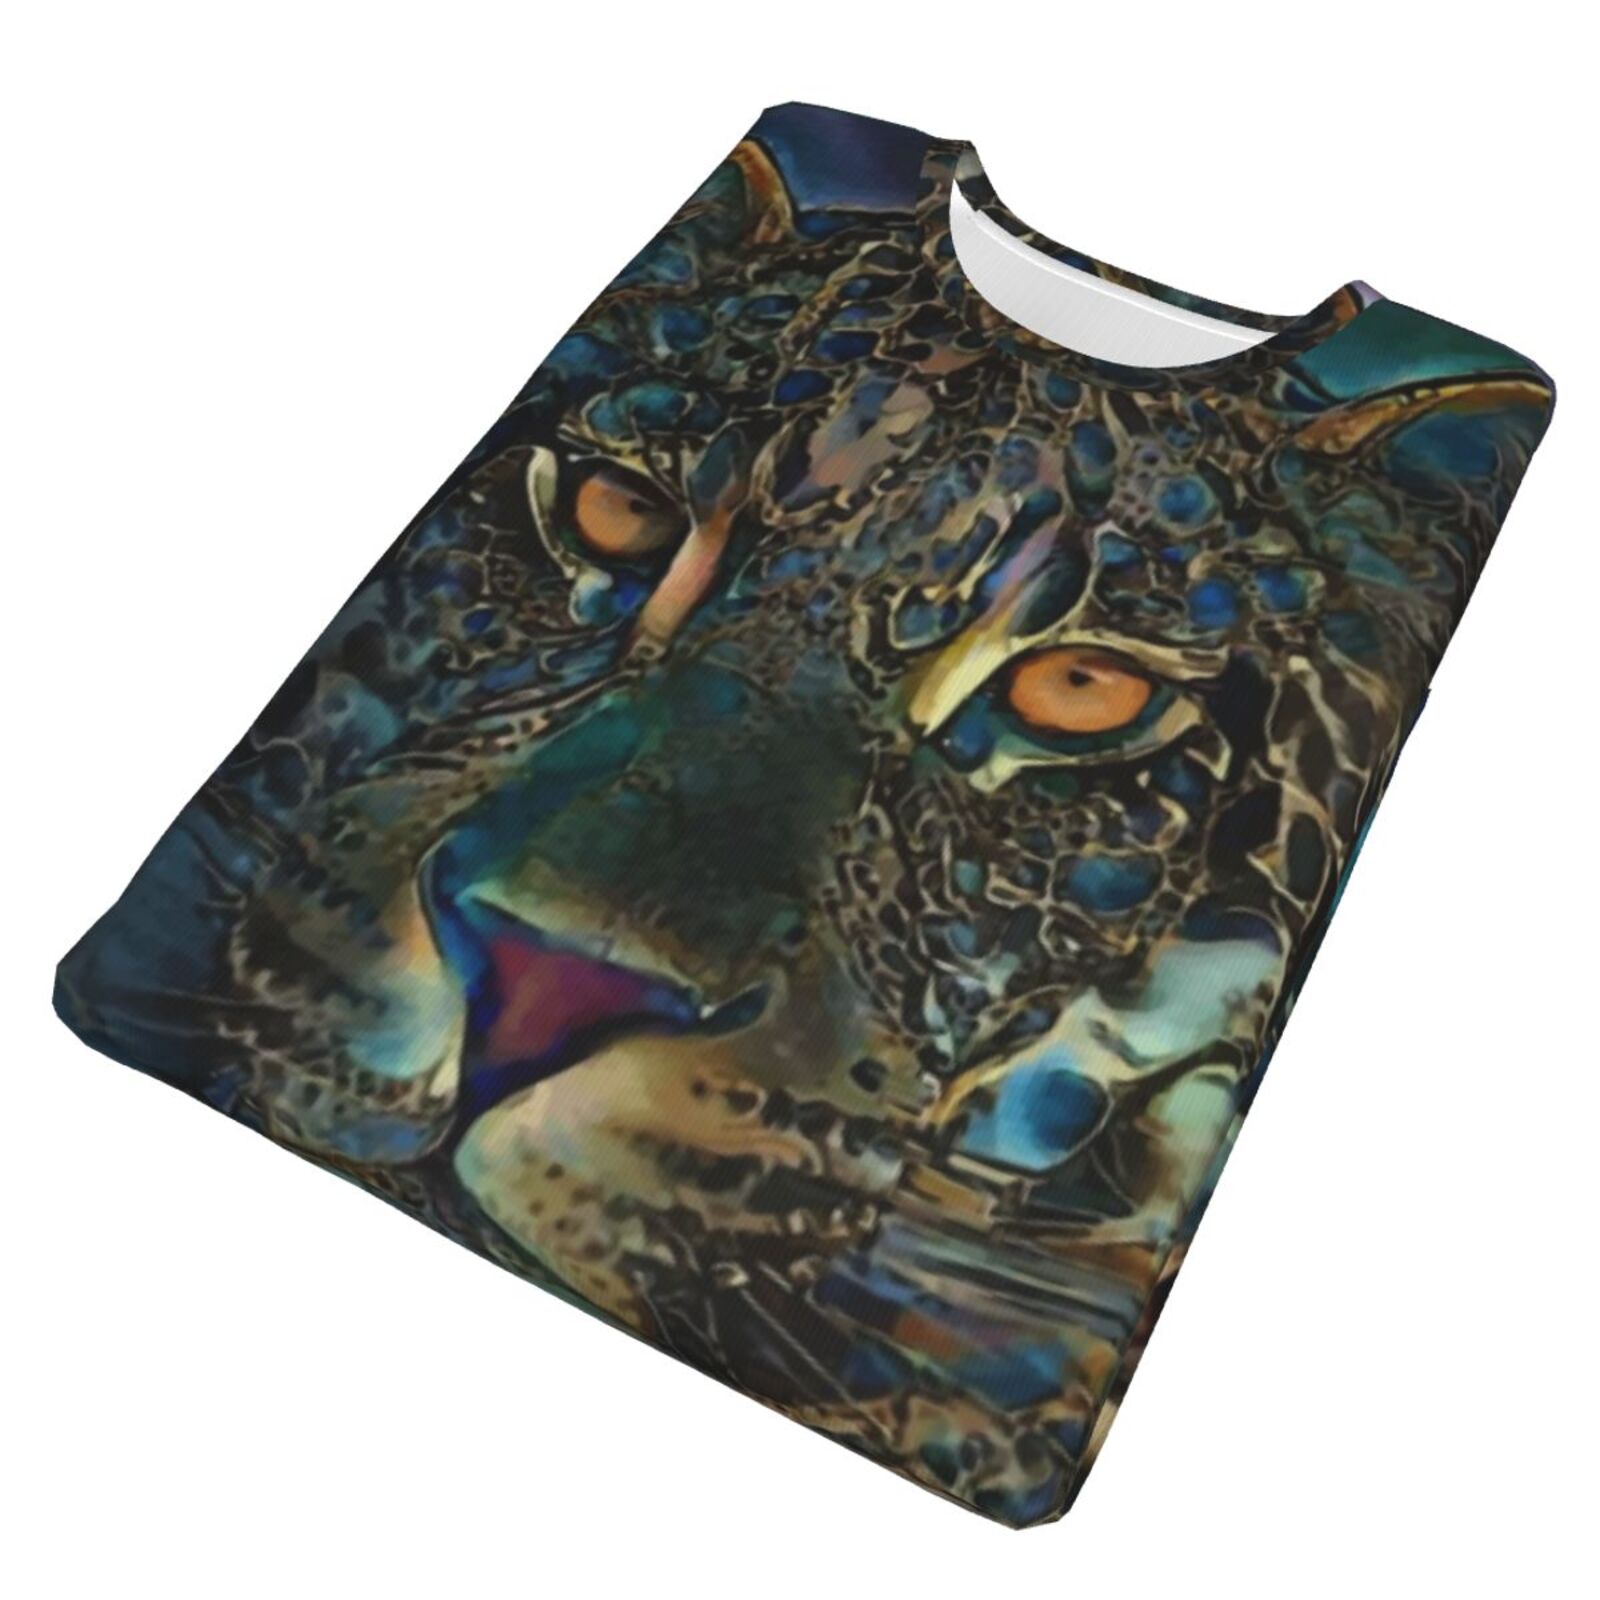 Camiseta Clássica Laria Leopard Elementos De Mídia Mista